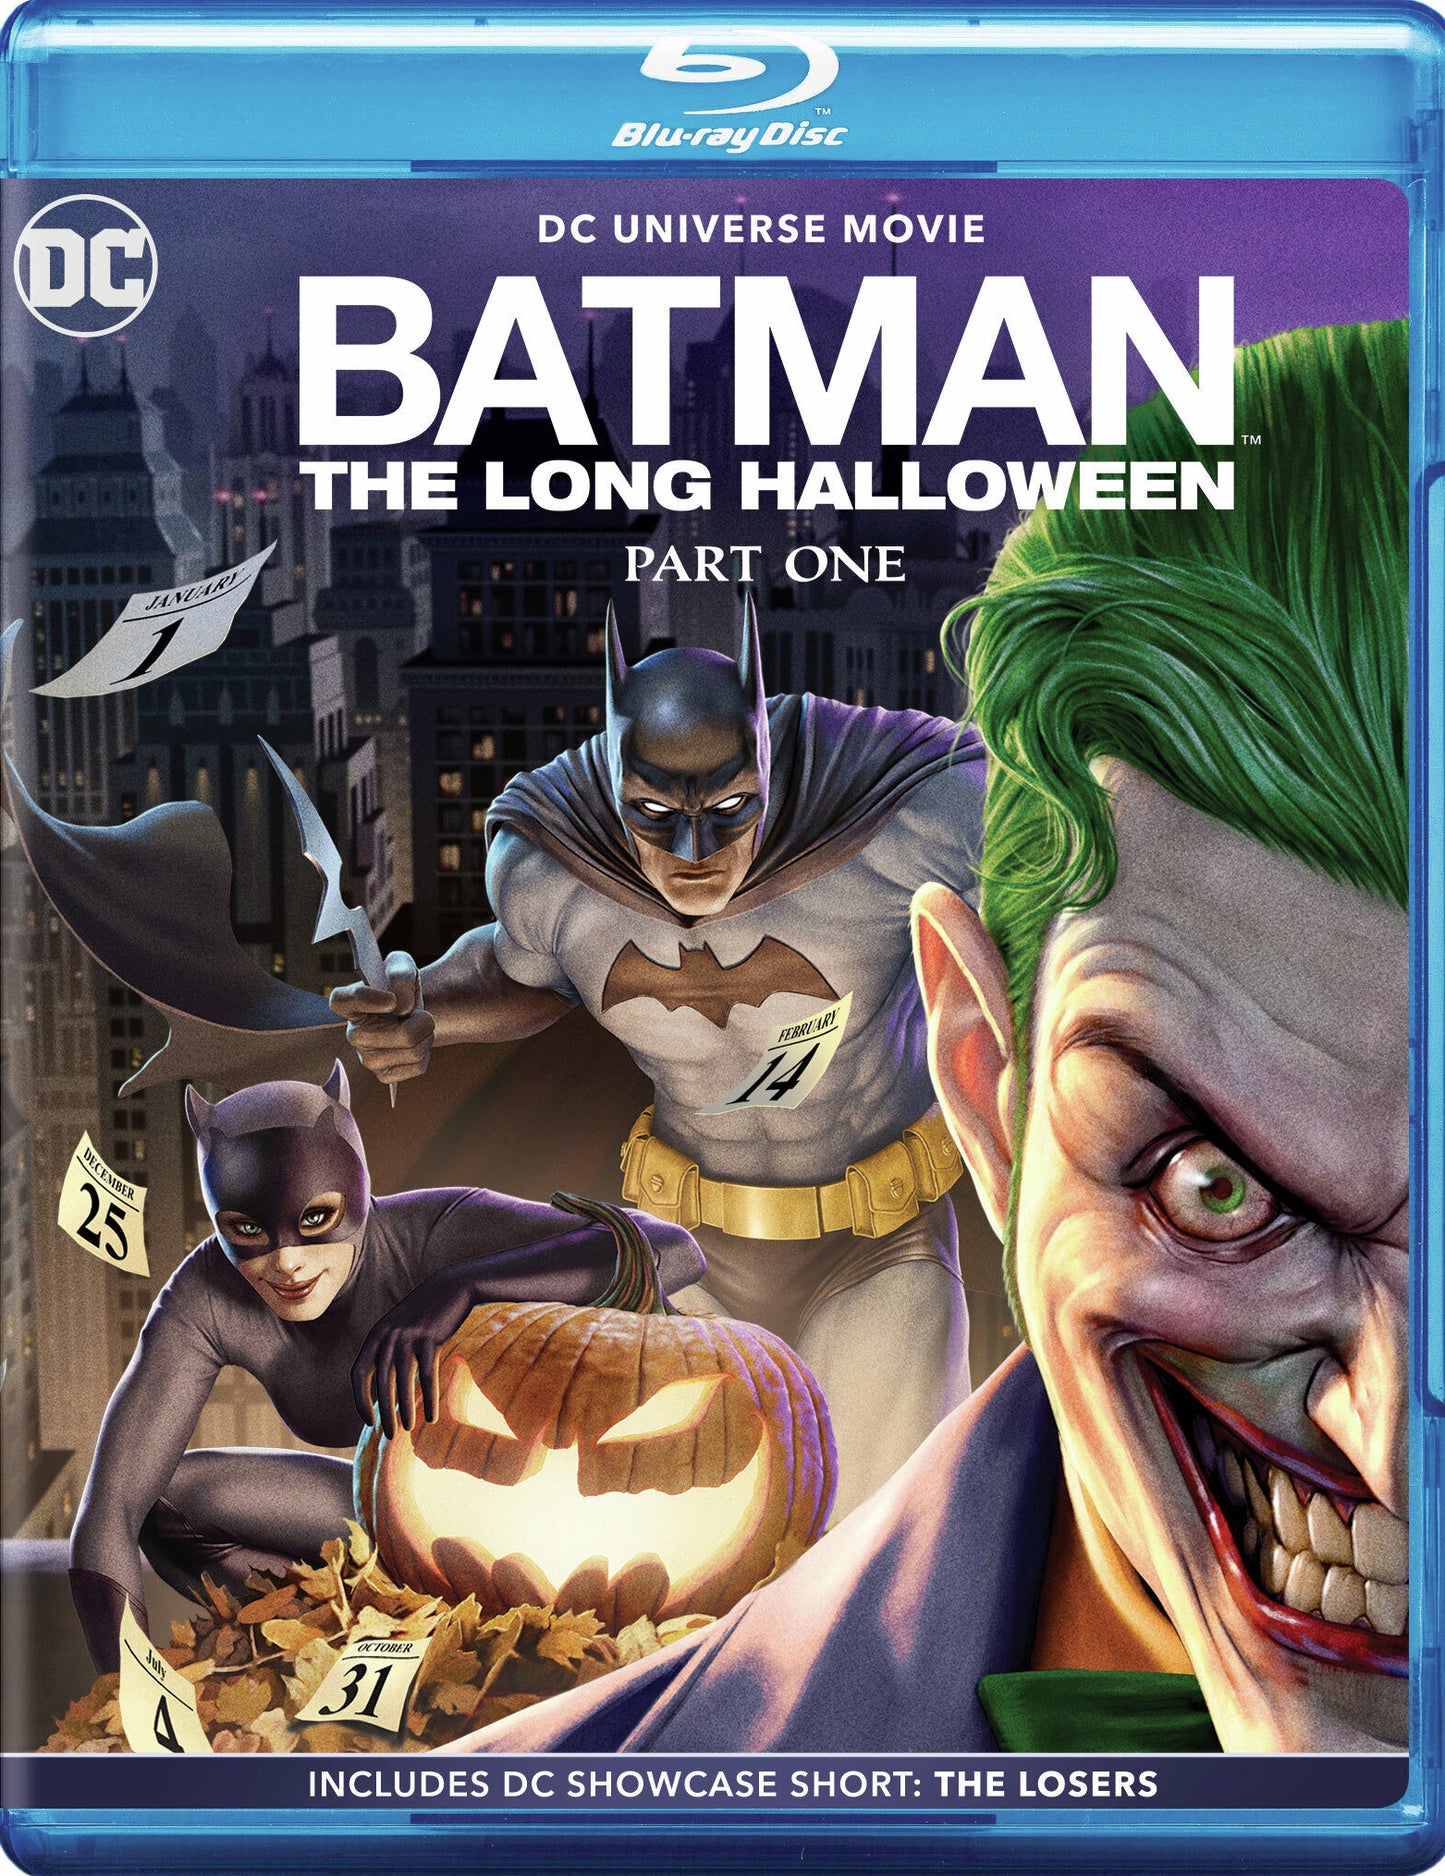 Batman: The Long Halloween - Part One [Blu-ray] cover art